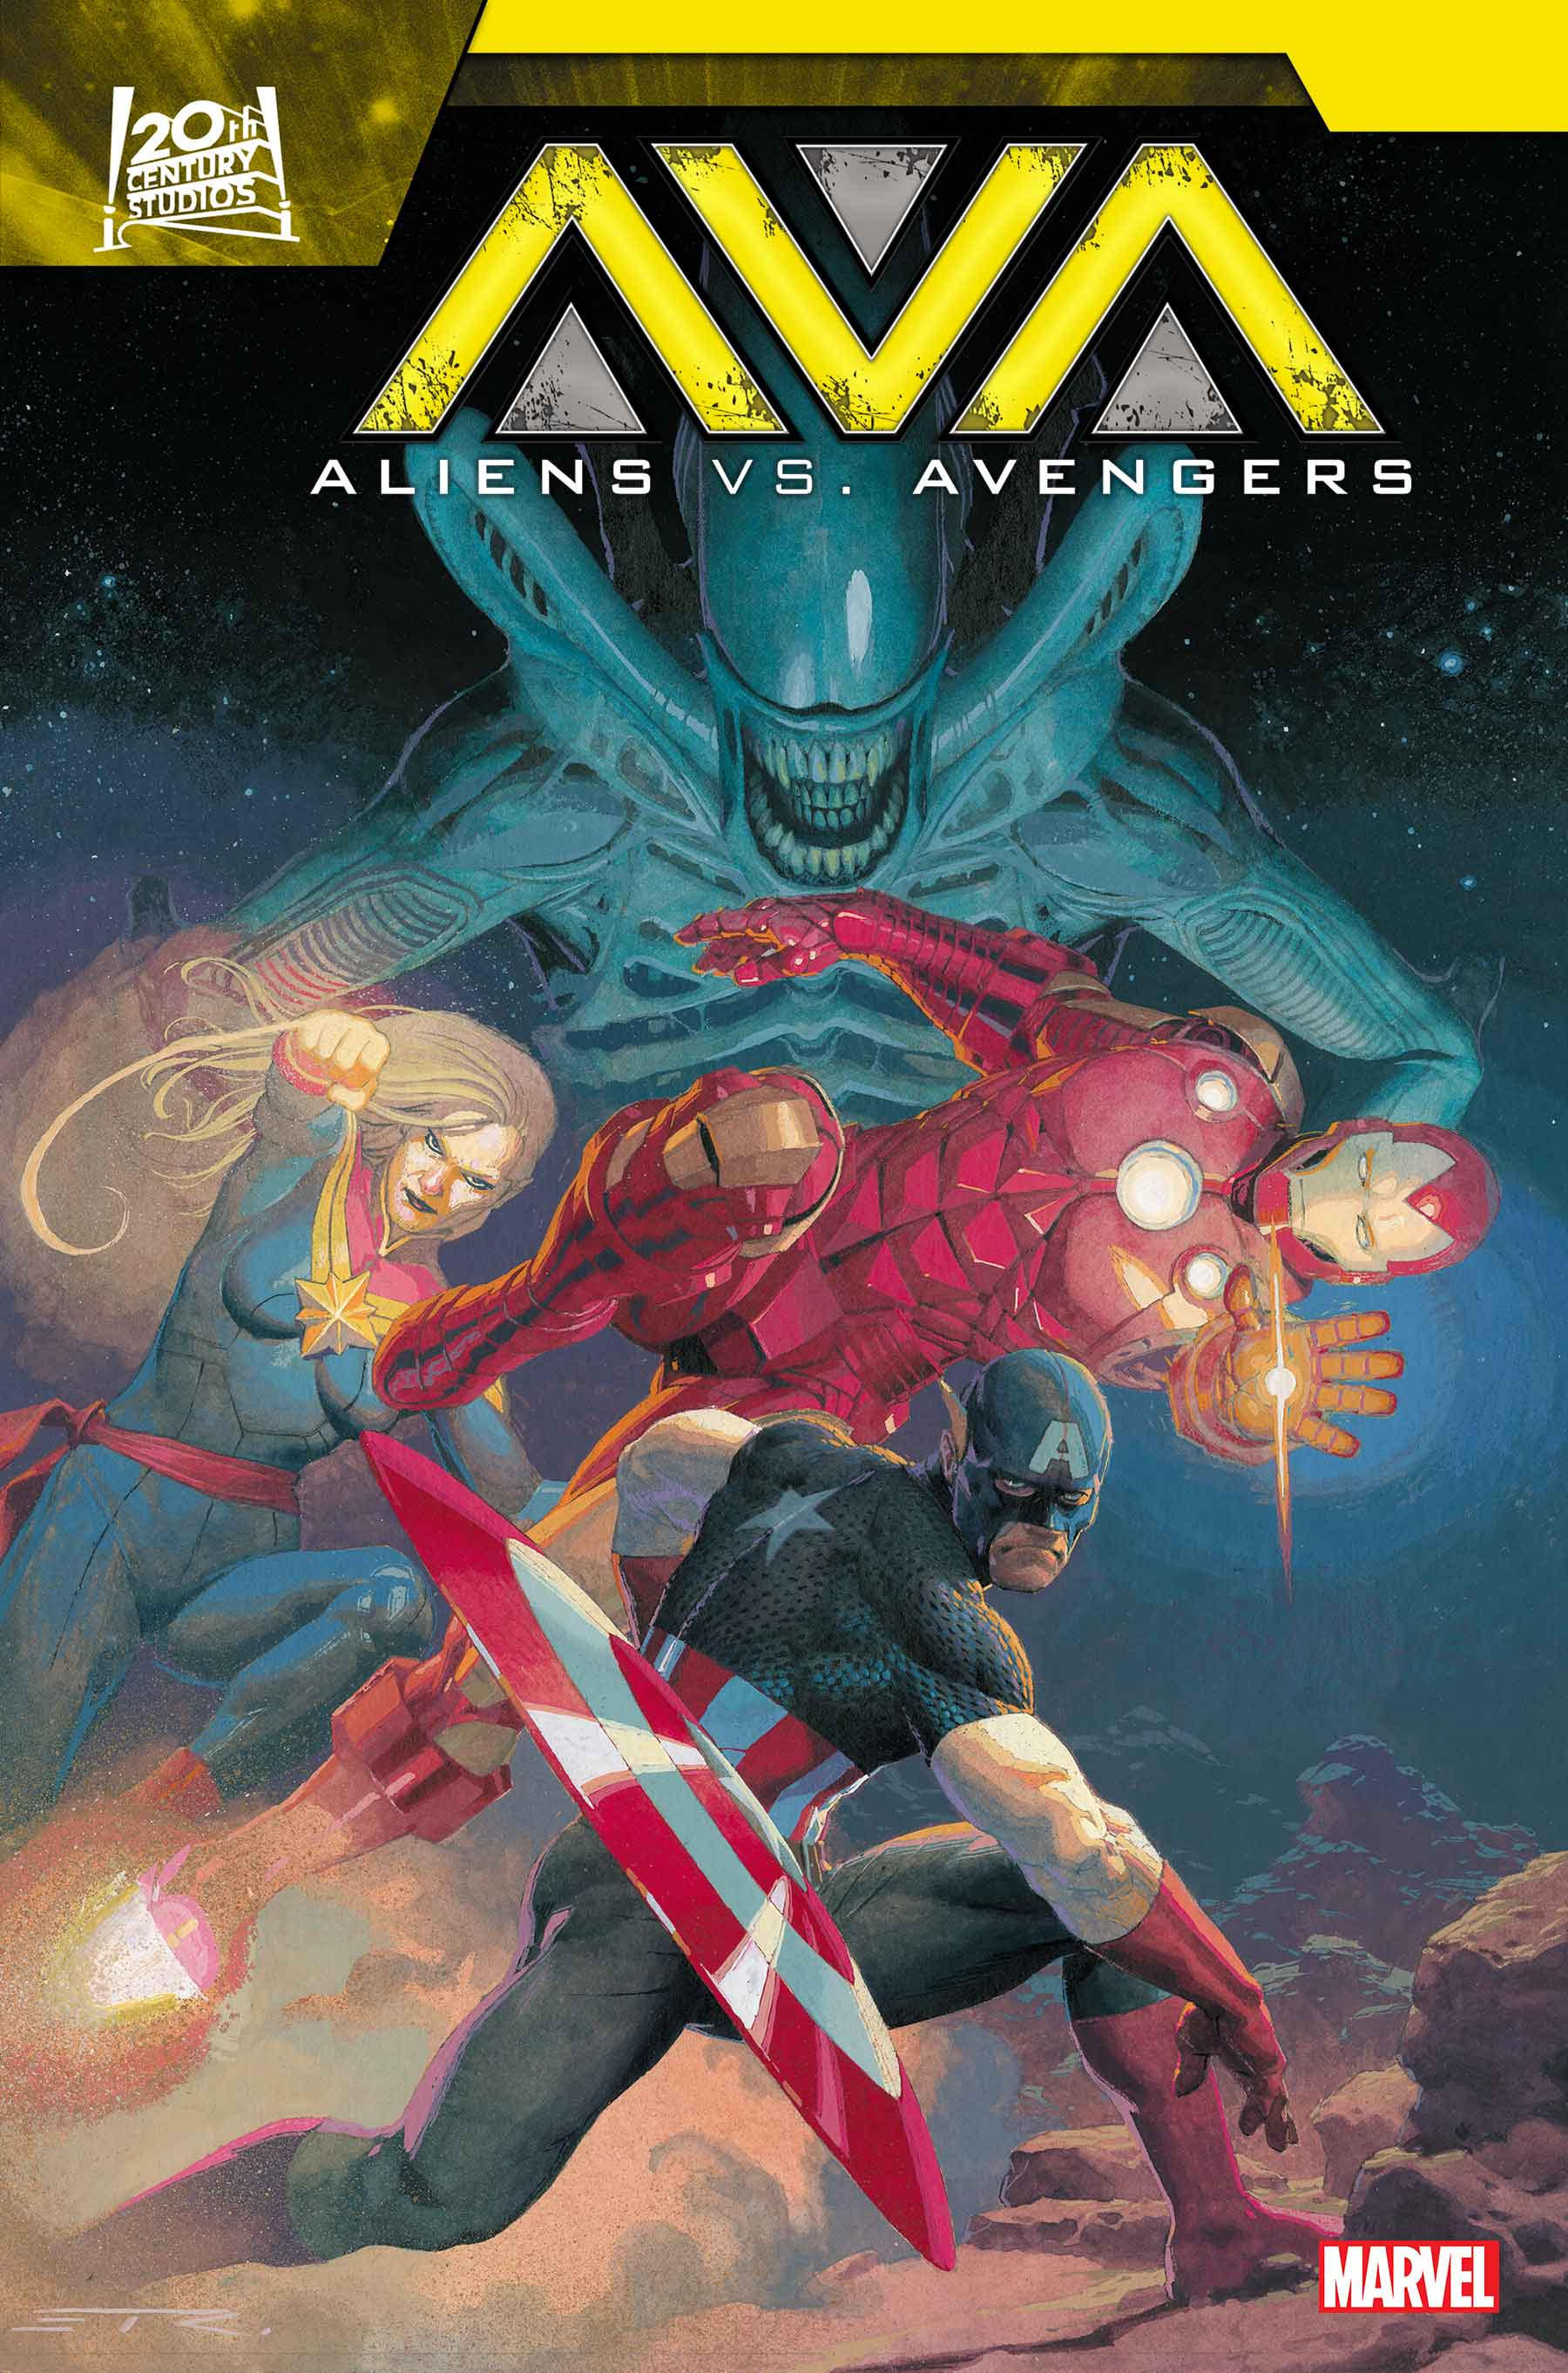 'aliens vs. avengers' pits marvel superheroes against acid-spewing xenomorphs